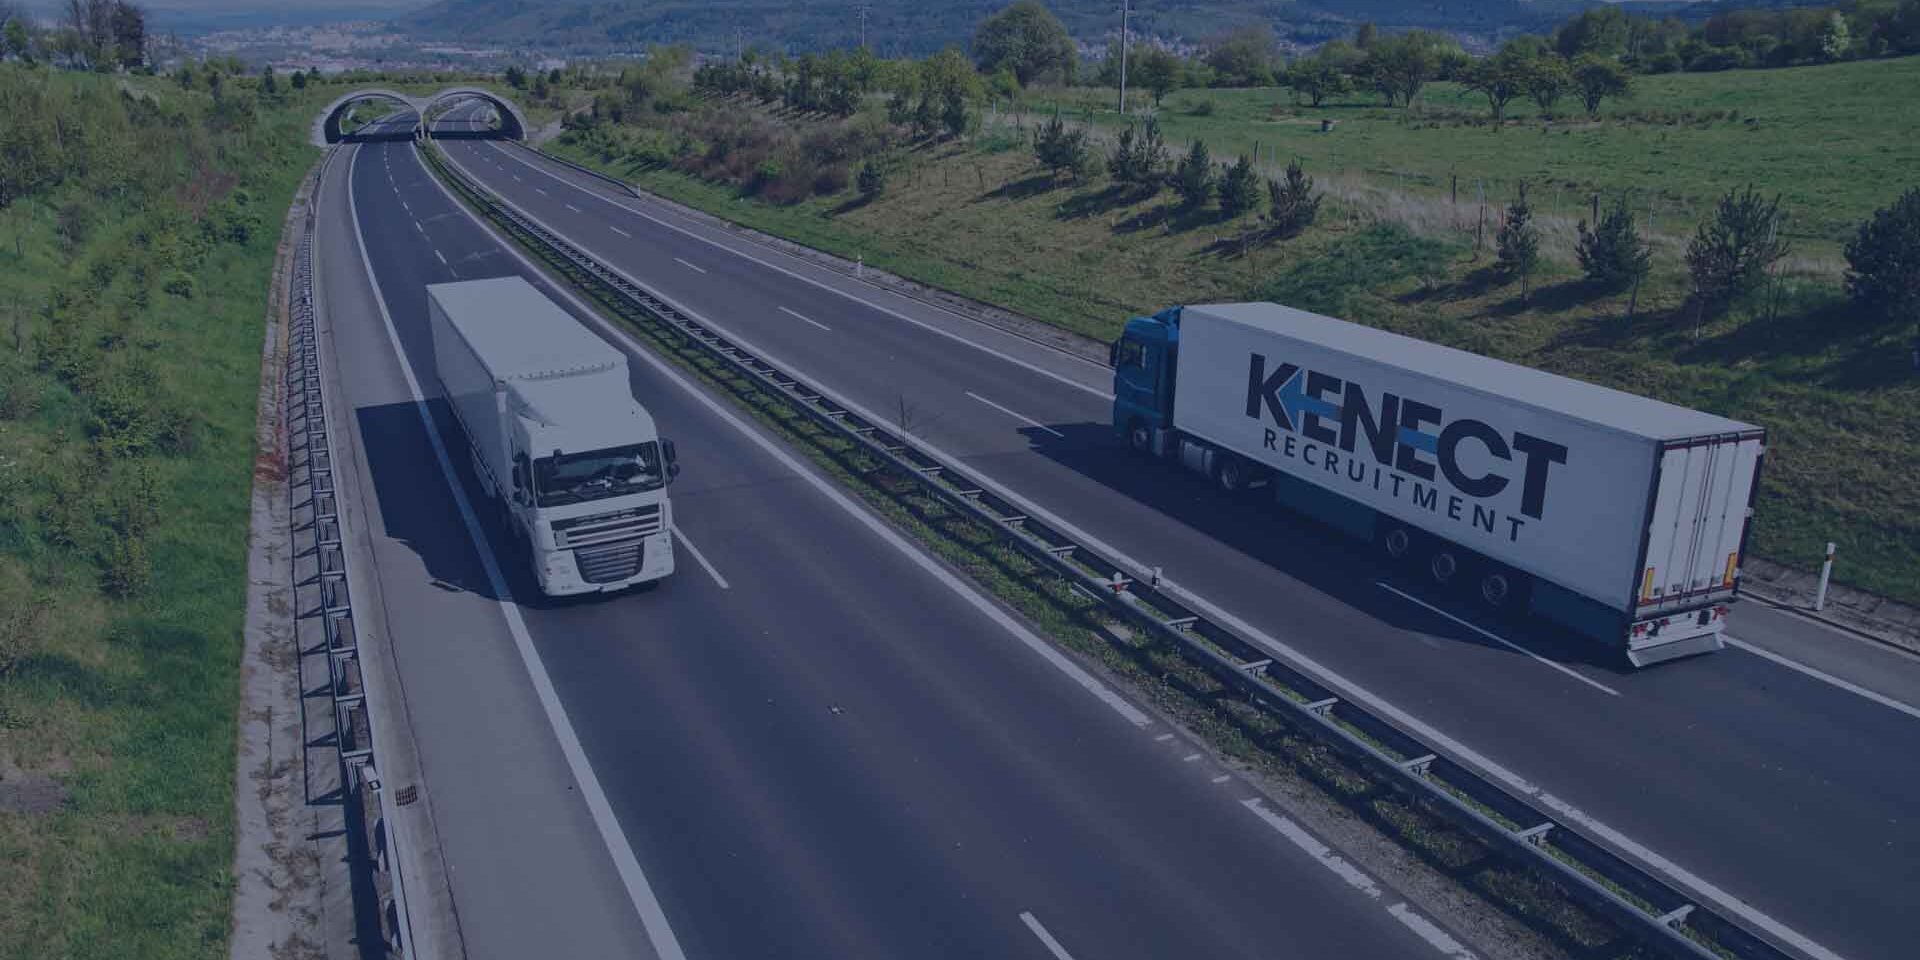 Kenect-Lorry-Passing-overlay